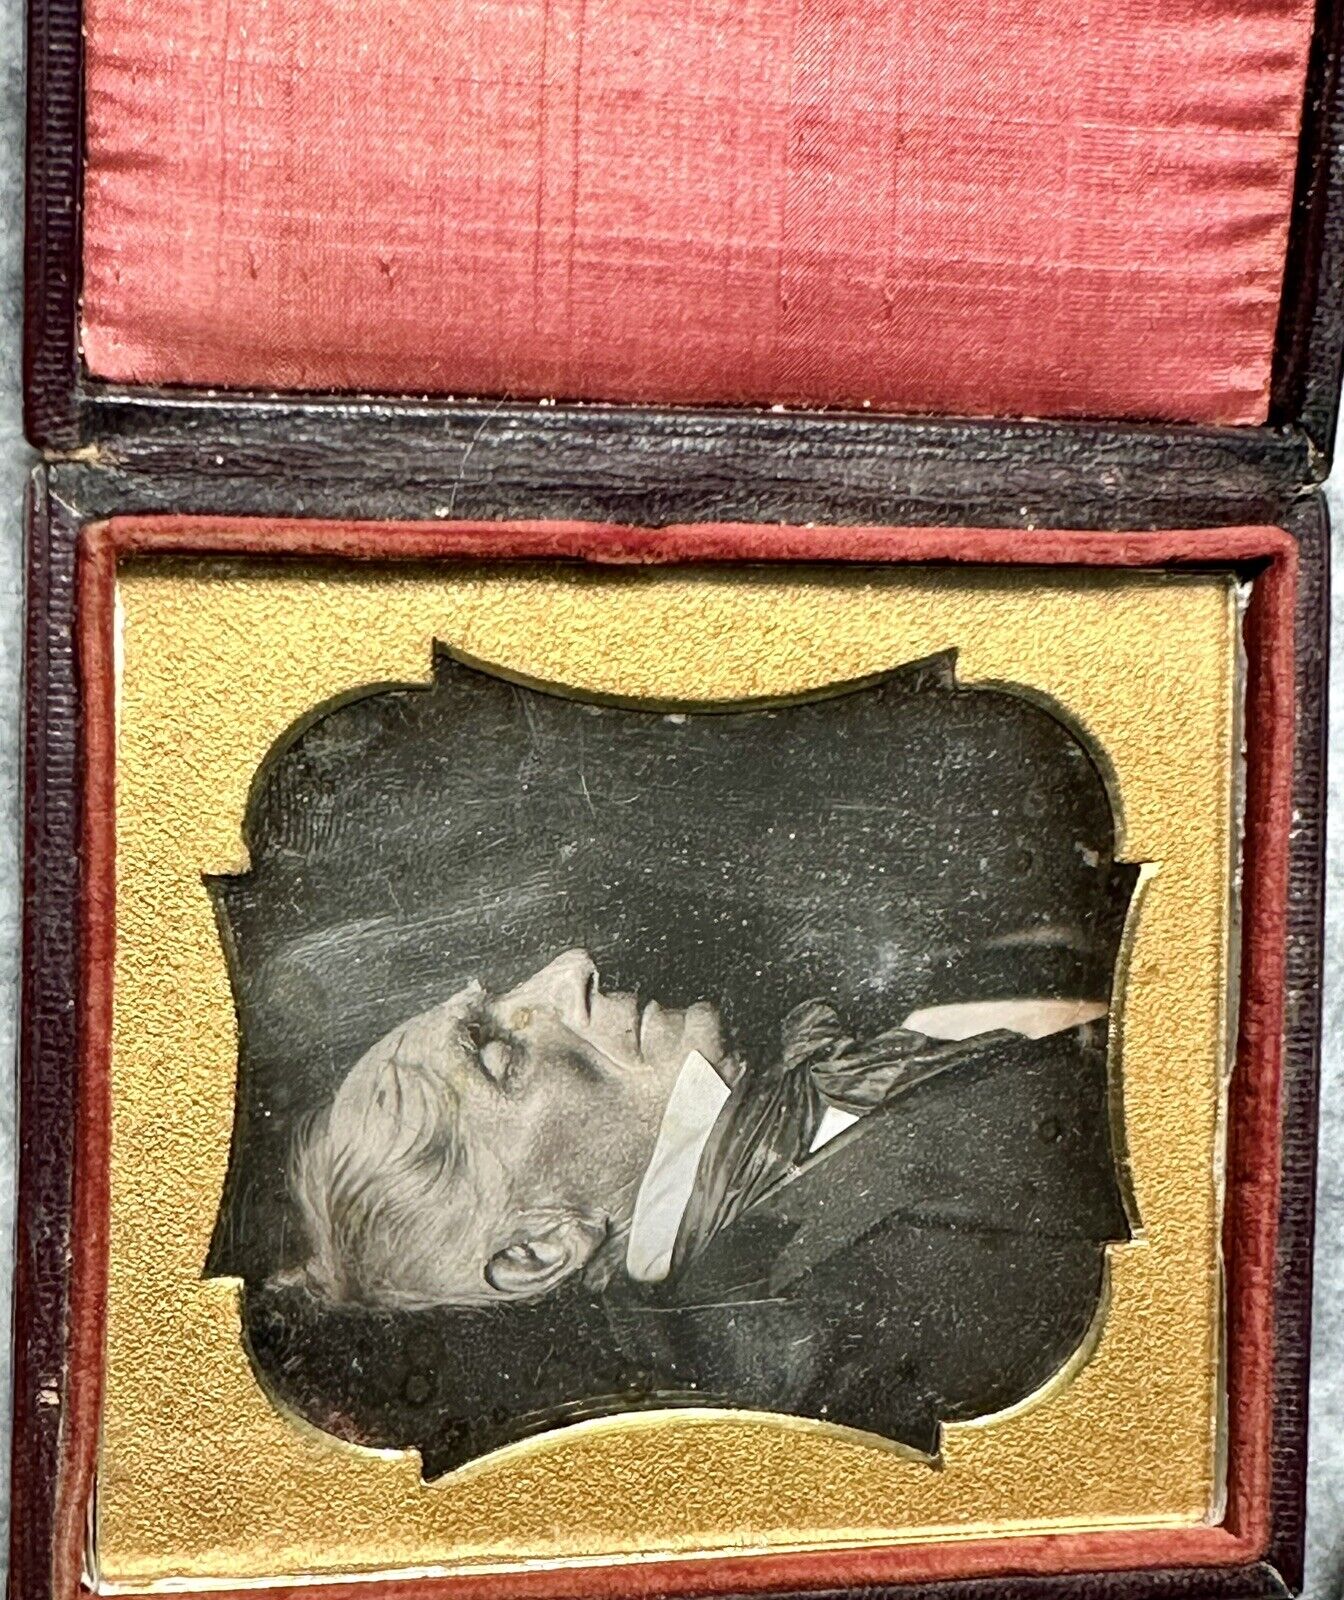 1840s Post Mortem Daguerreotype Photo of a Man in Profile - Plumbe Case?